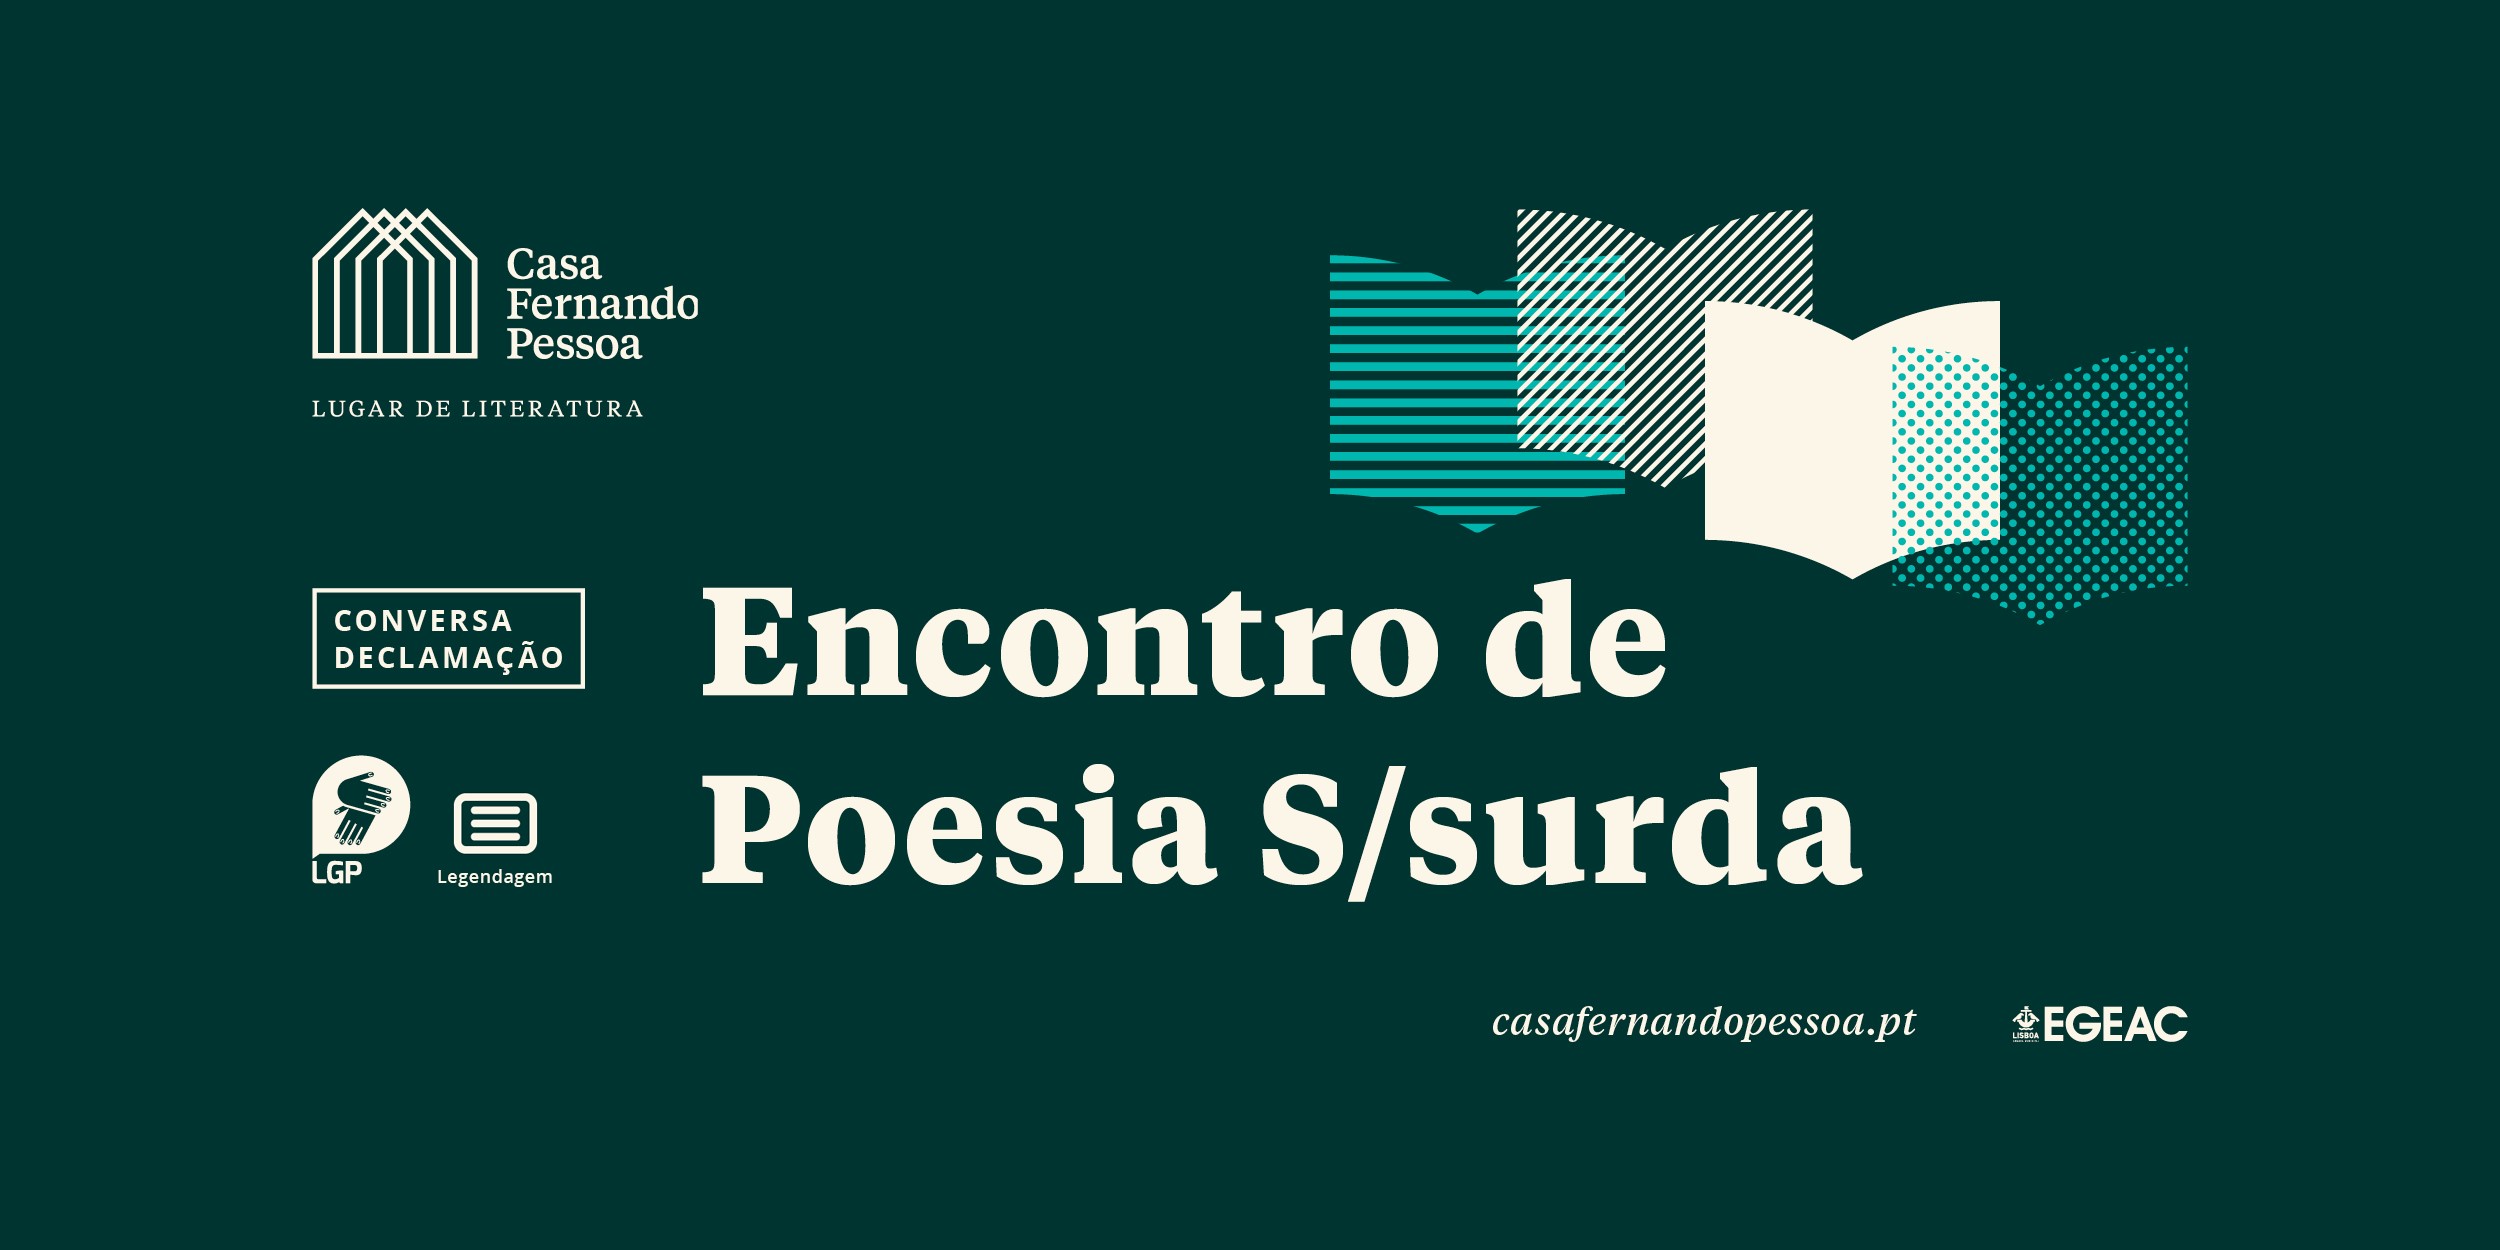 Encontro de Poesia S/surda - Casa Fernando Pessoa